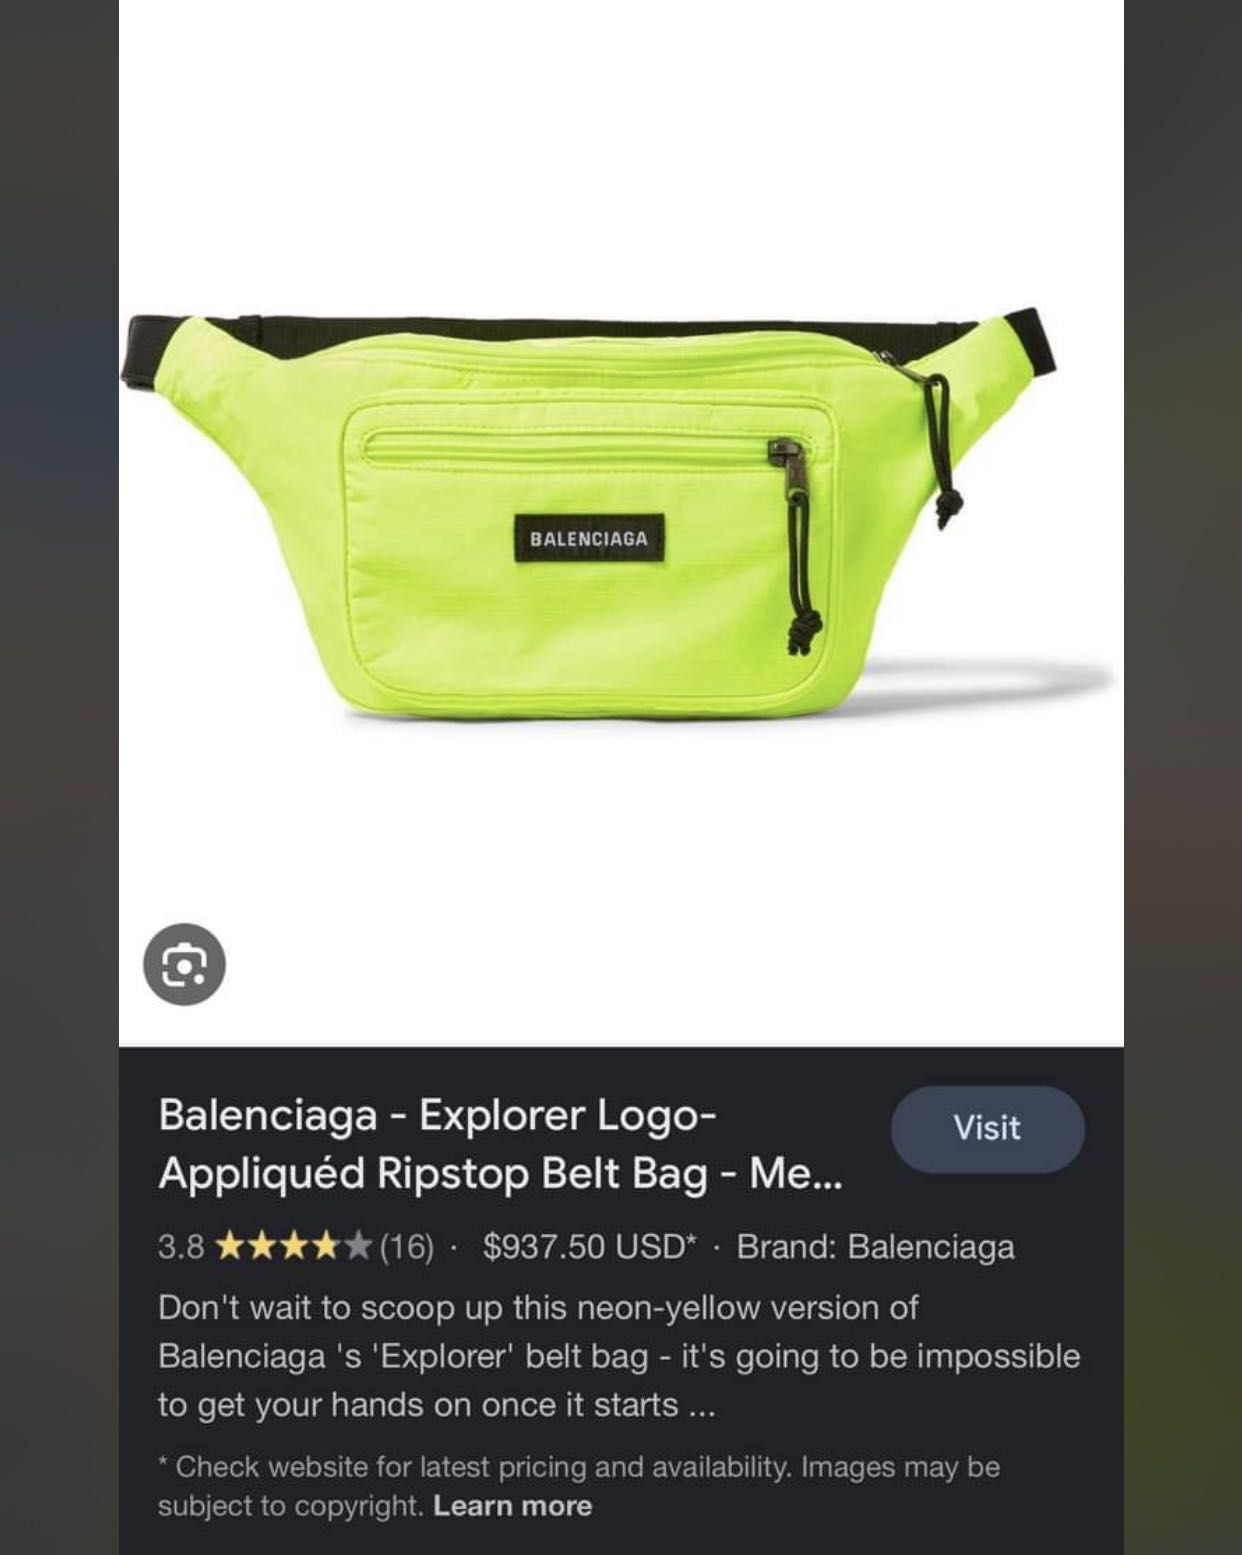 Balenciaga's Explorer Fanny Pack in Neon Yellow